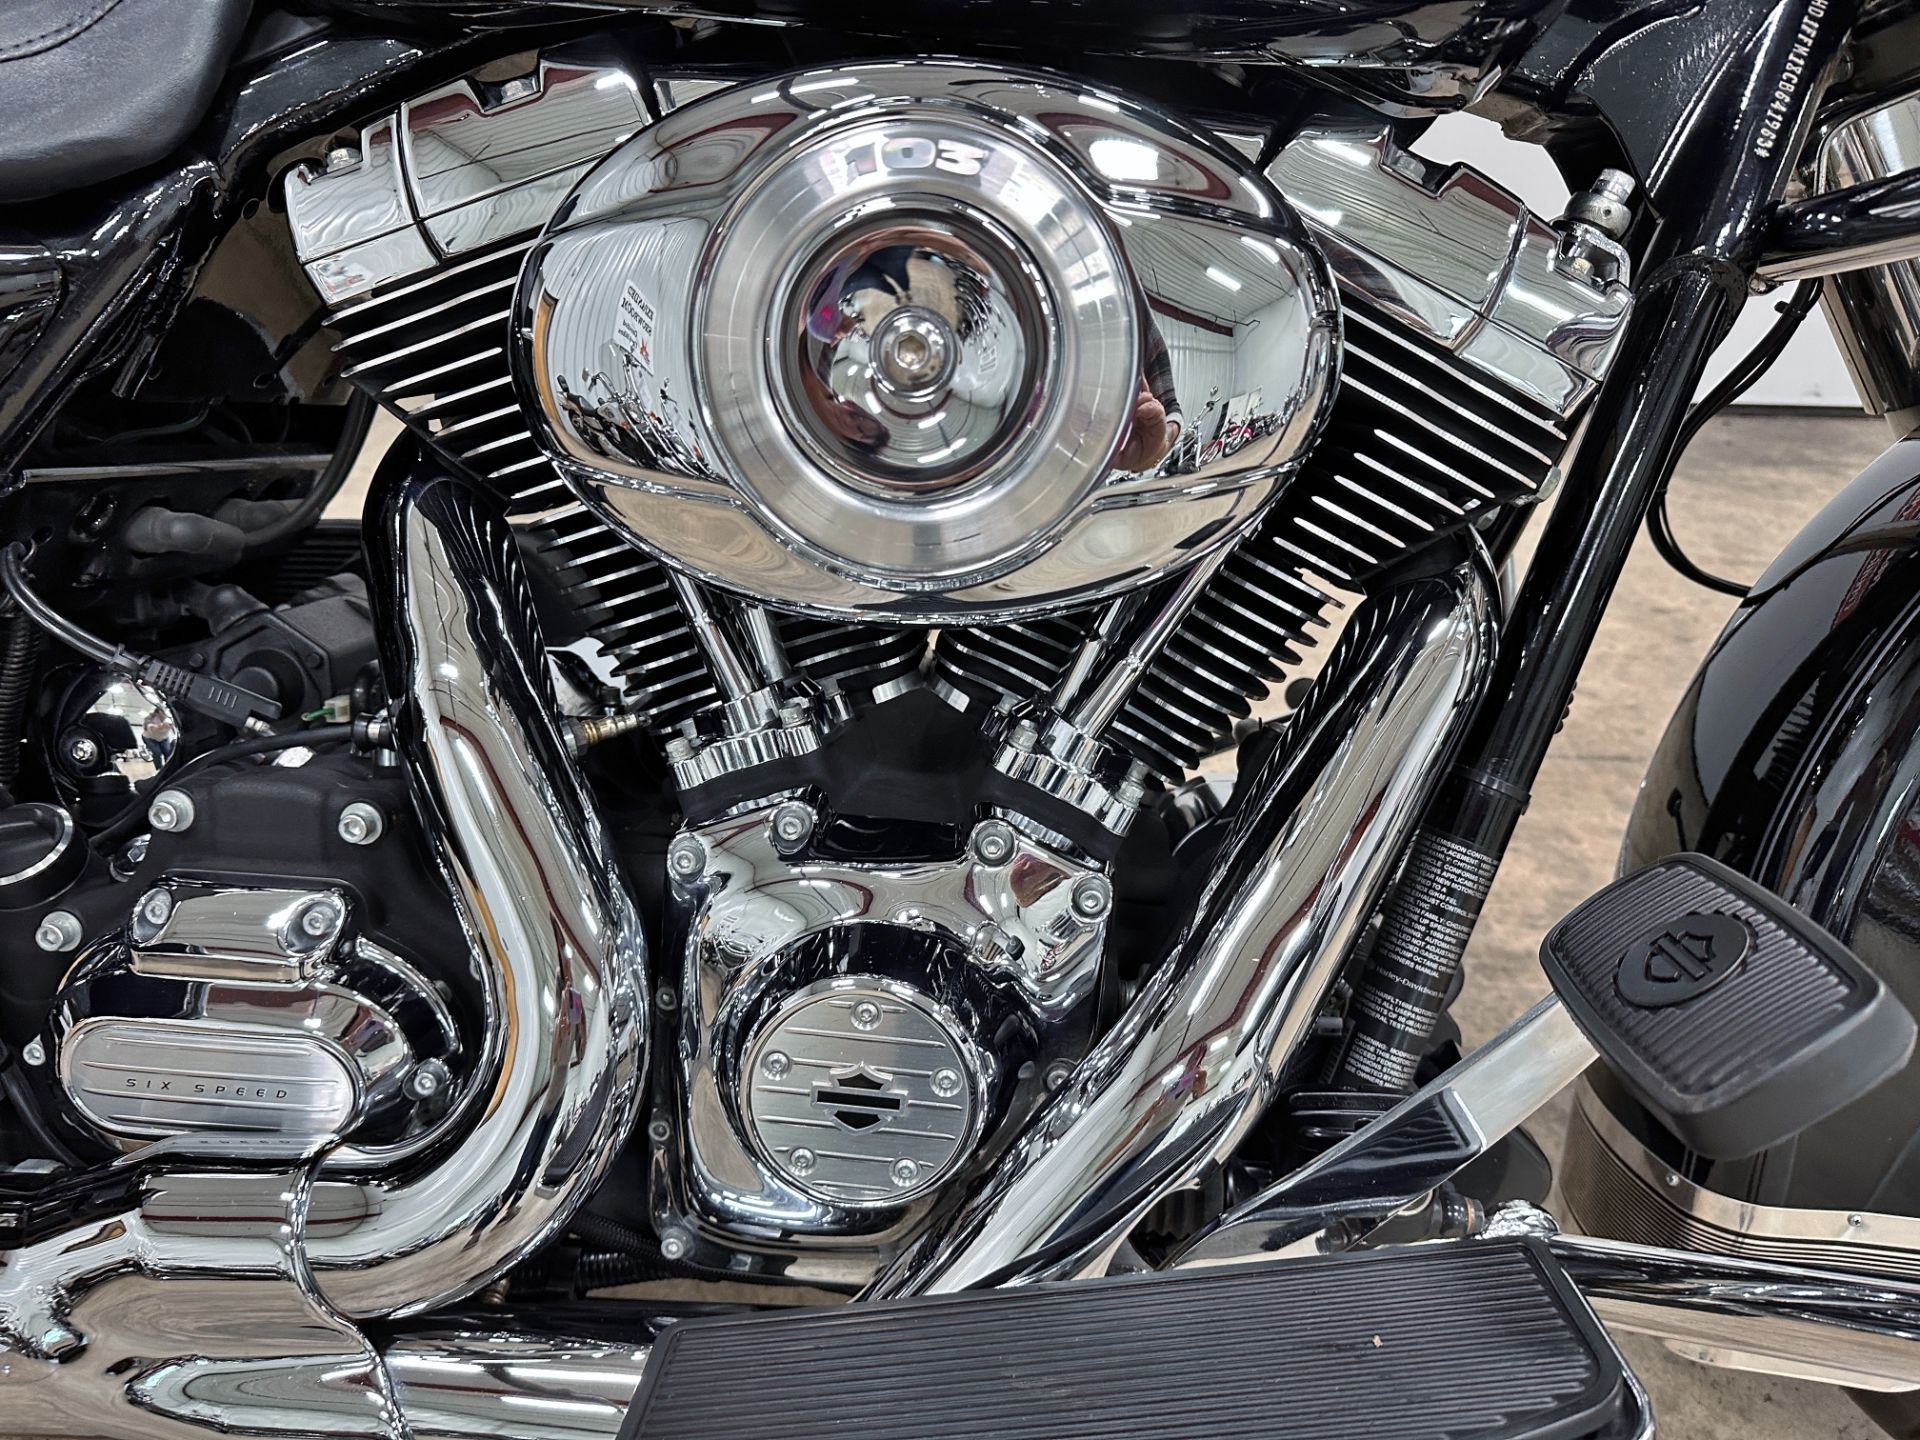 2012 Harley-Davidson Electra Glide® Classic in Sandusky, Ohio - Photo 2